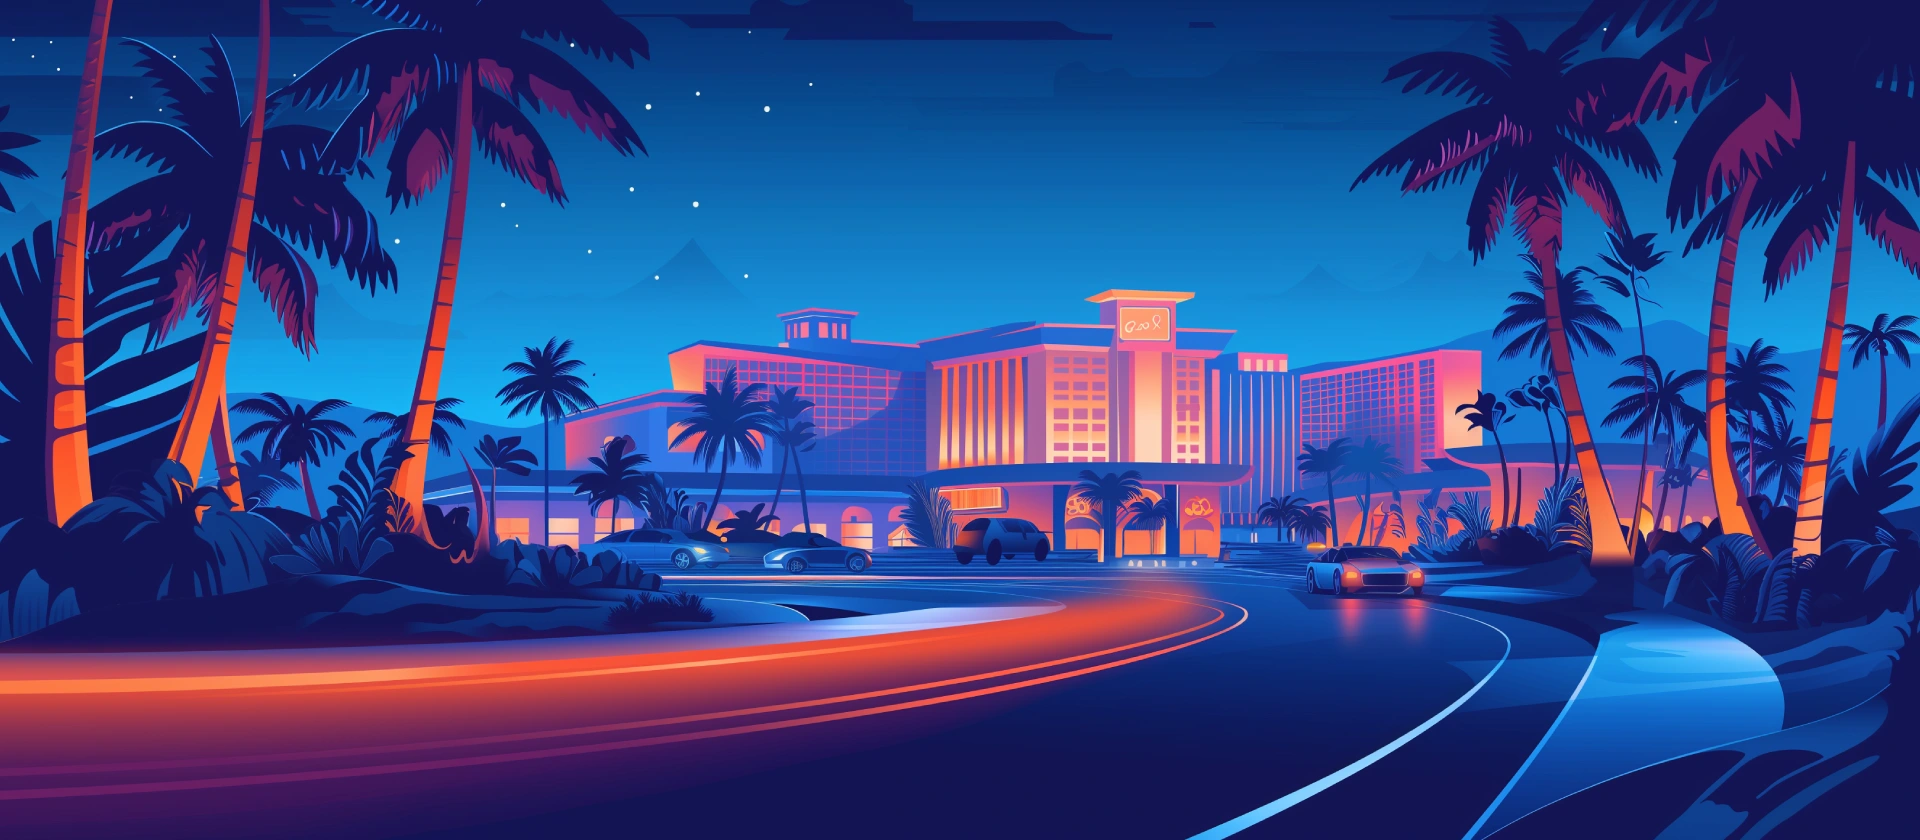 Florida casino with retro cartoon vibes